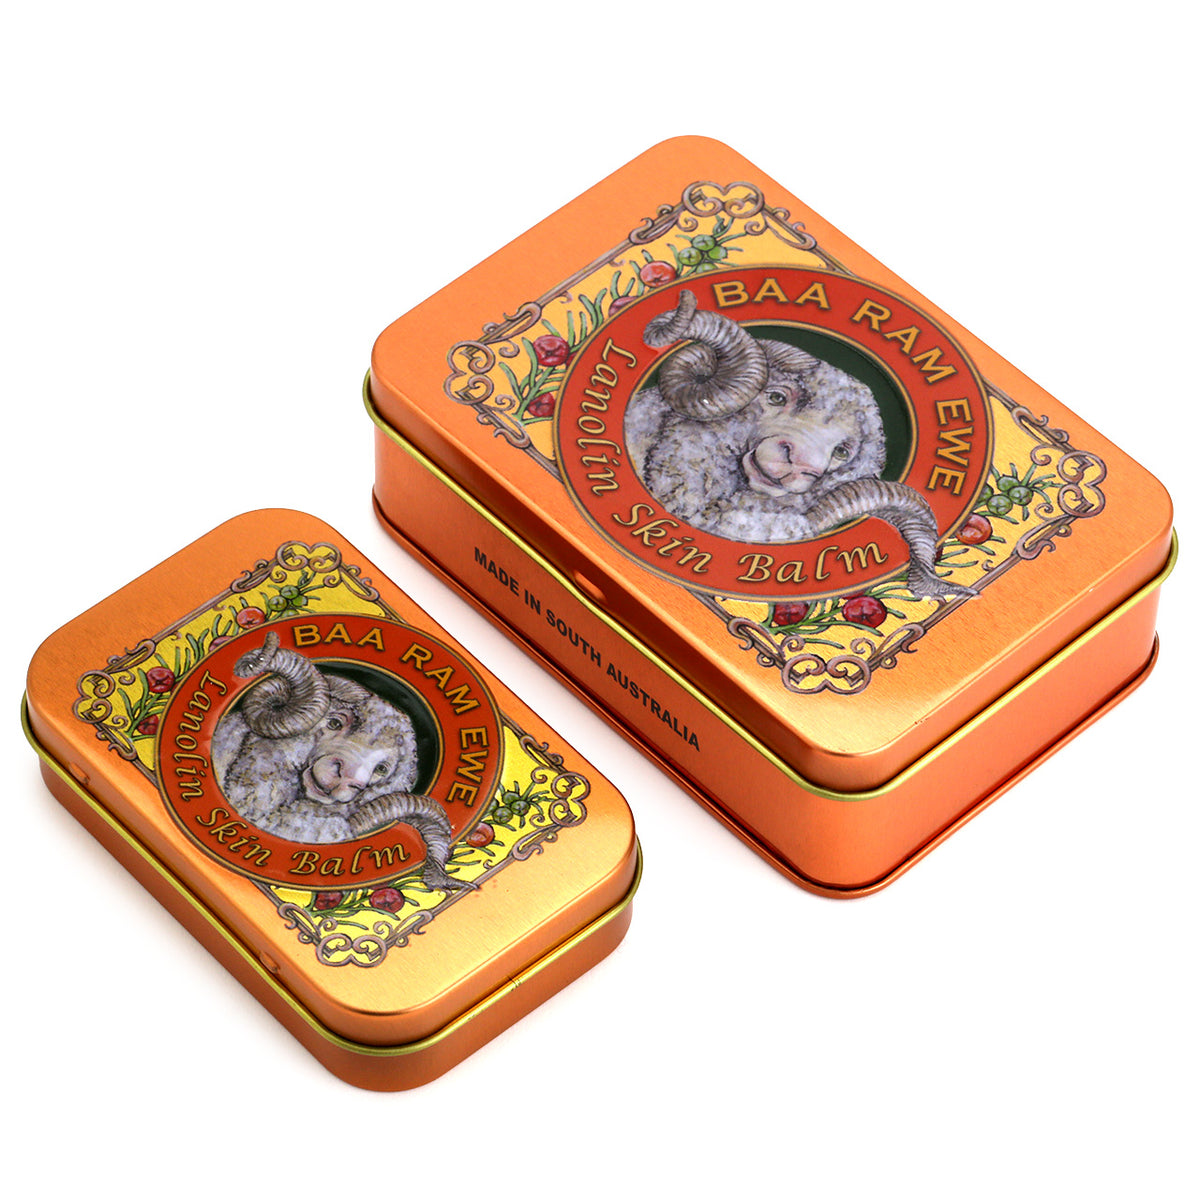 Lucamar Lanolin Skin Balm in copper coloured tins - comparison view of 120g and 50g tins, Baa Ram Ewe